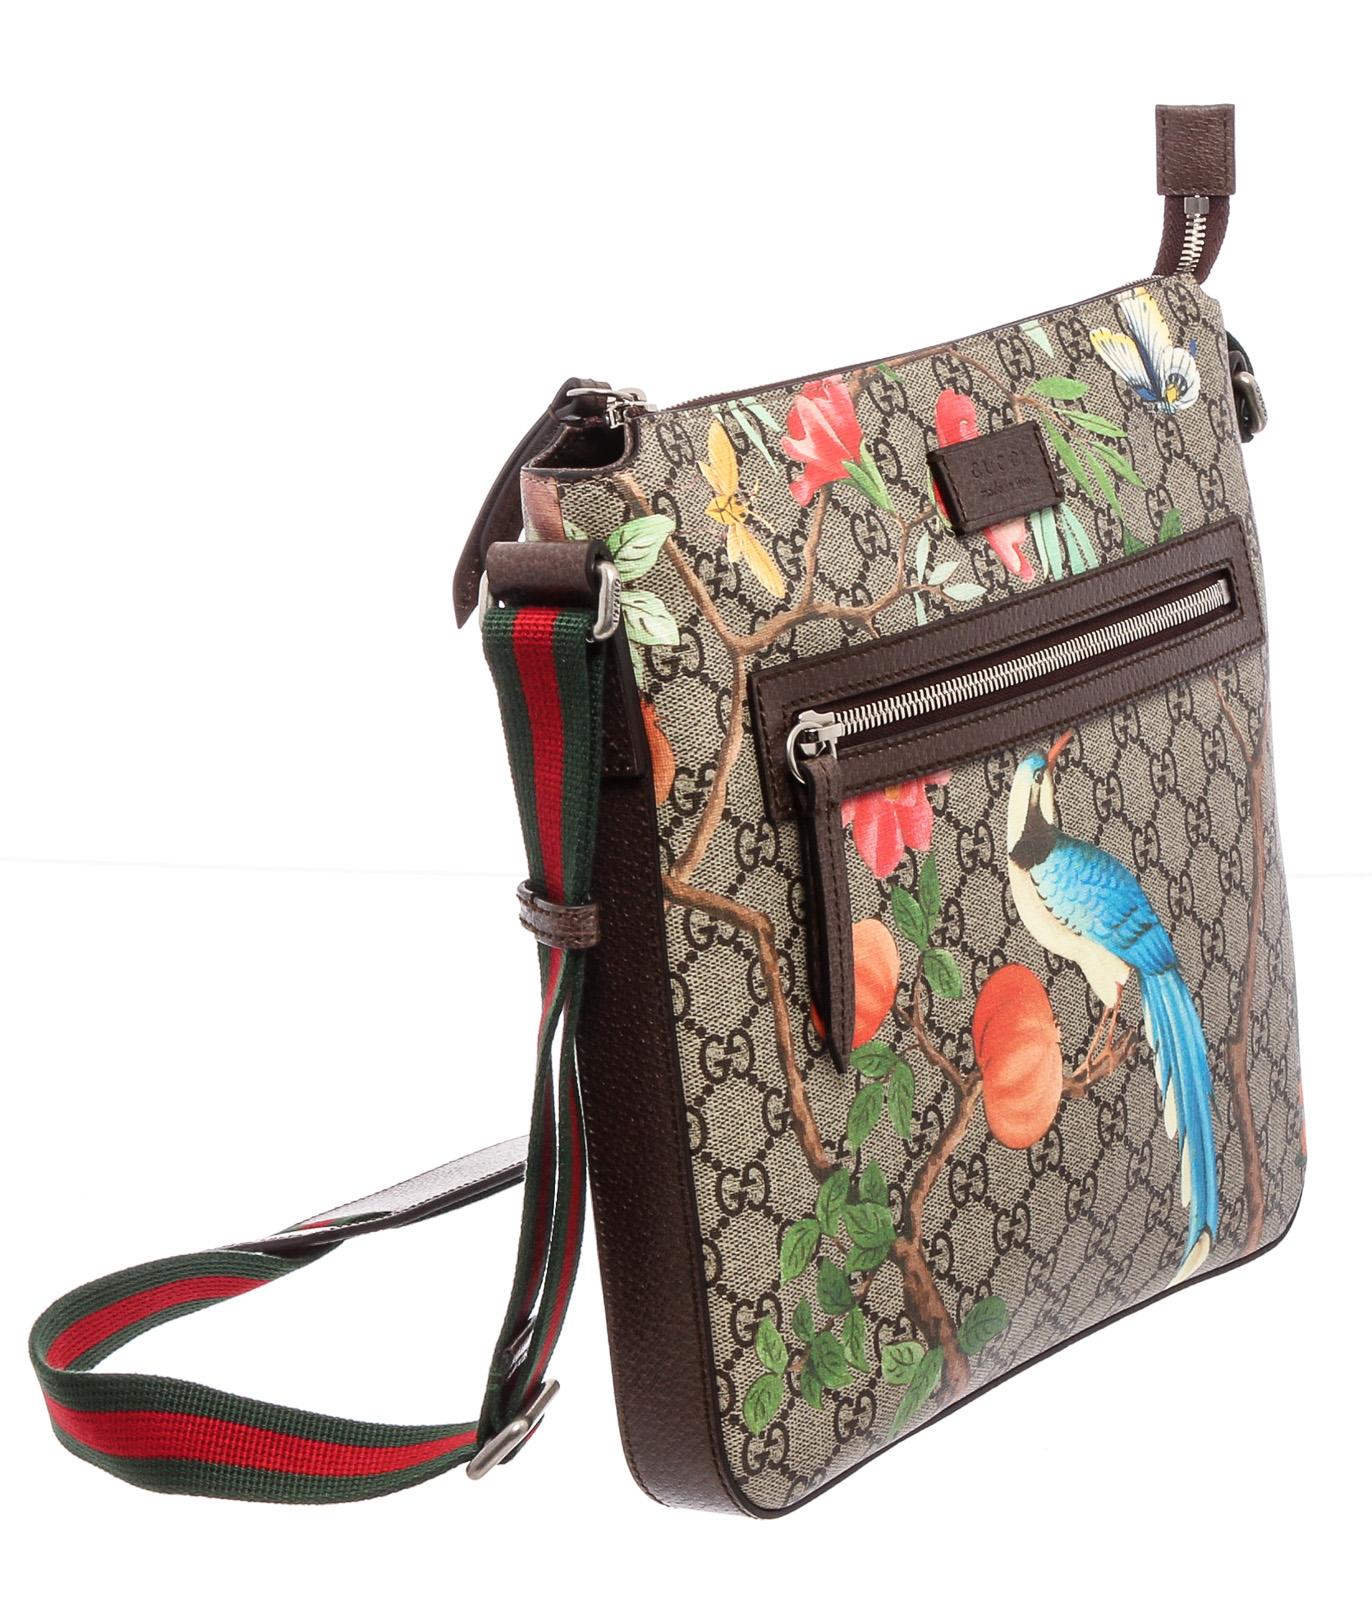 Gucci Tian Bag - For Sale on 1stDibs | gucci bag with bird design